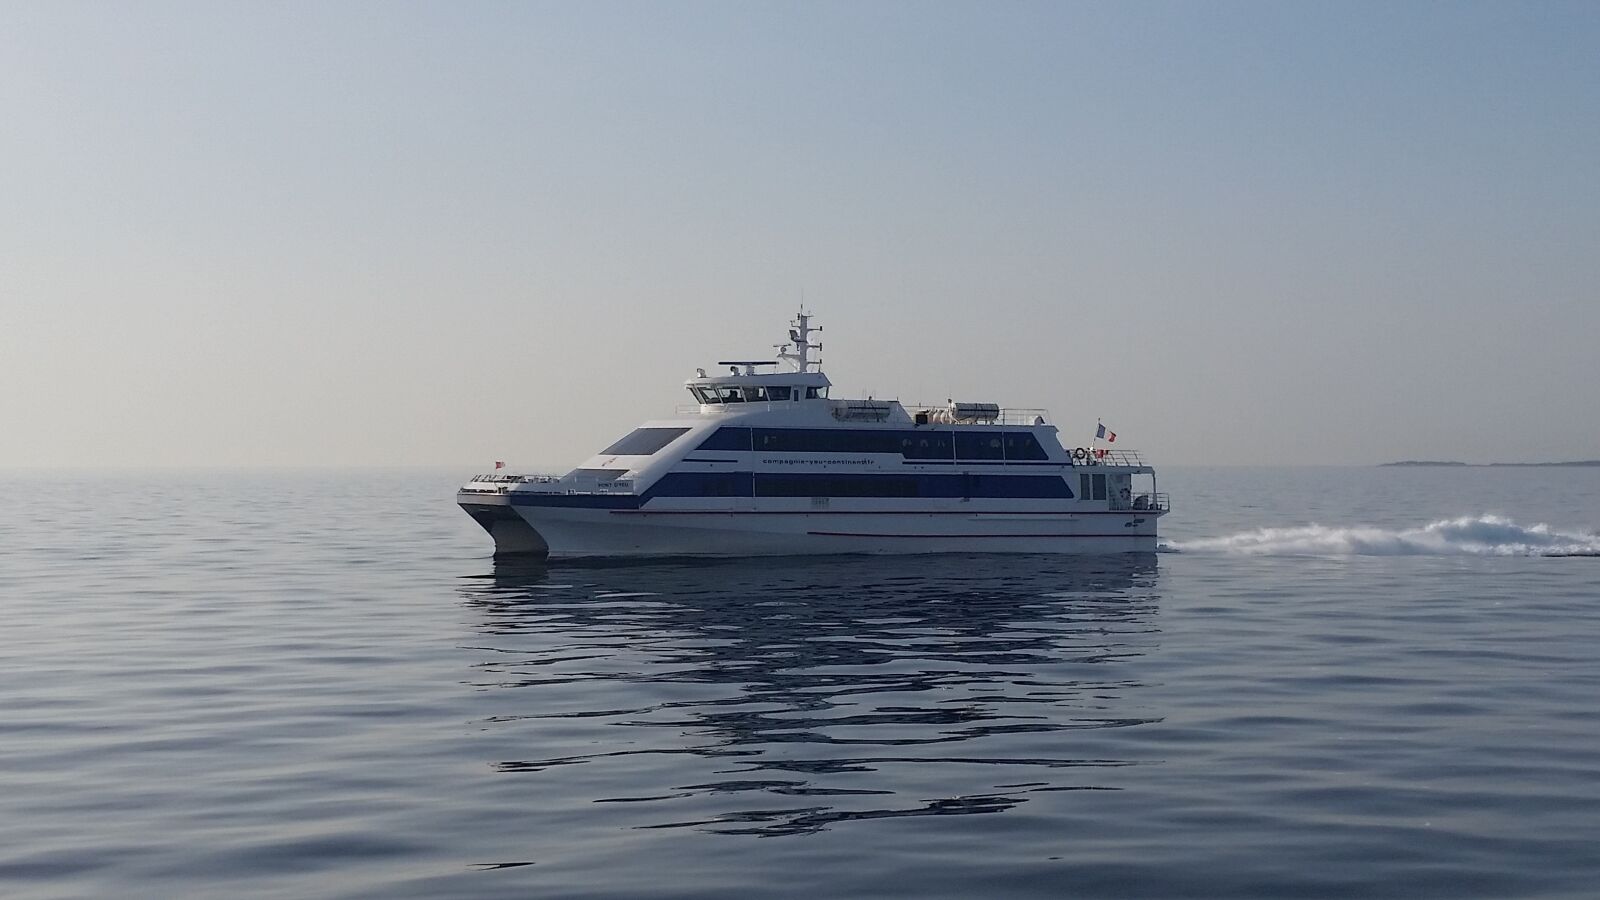 Samsung Galaxy S5 sample photo. Boat, sea, ocean photography